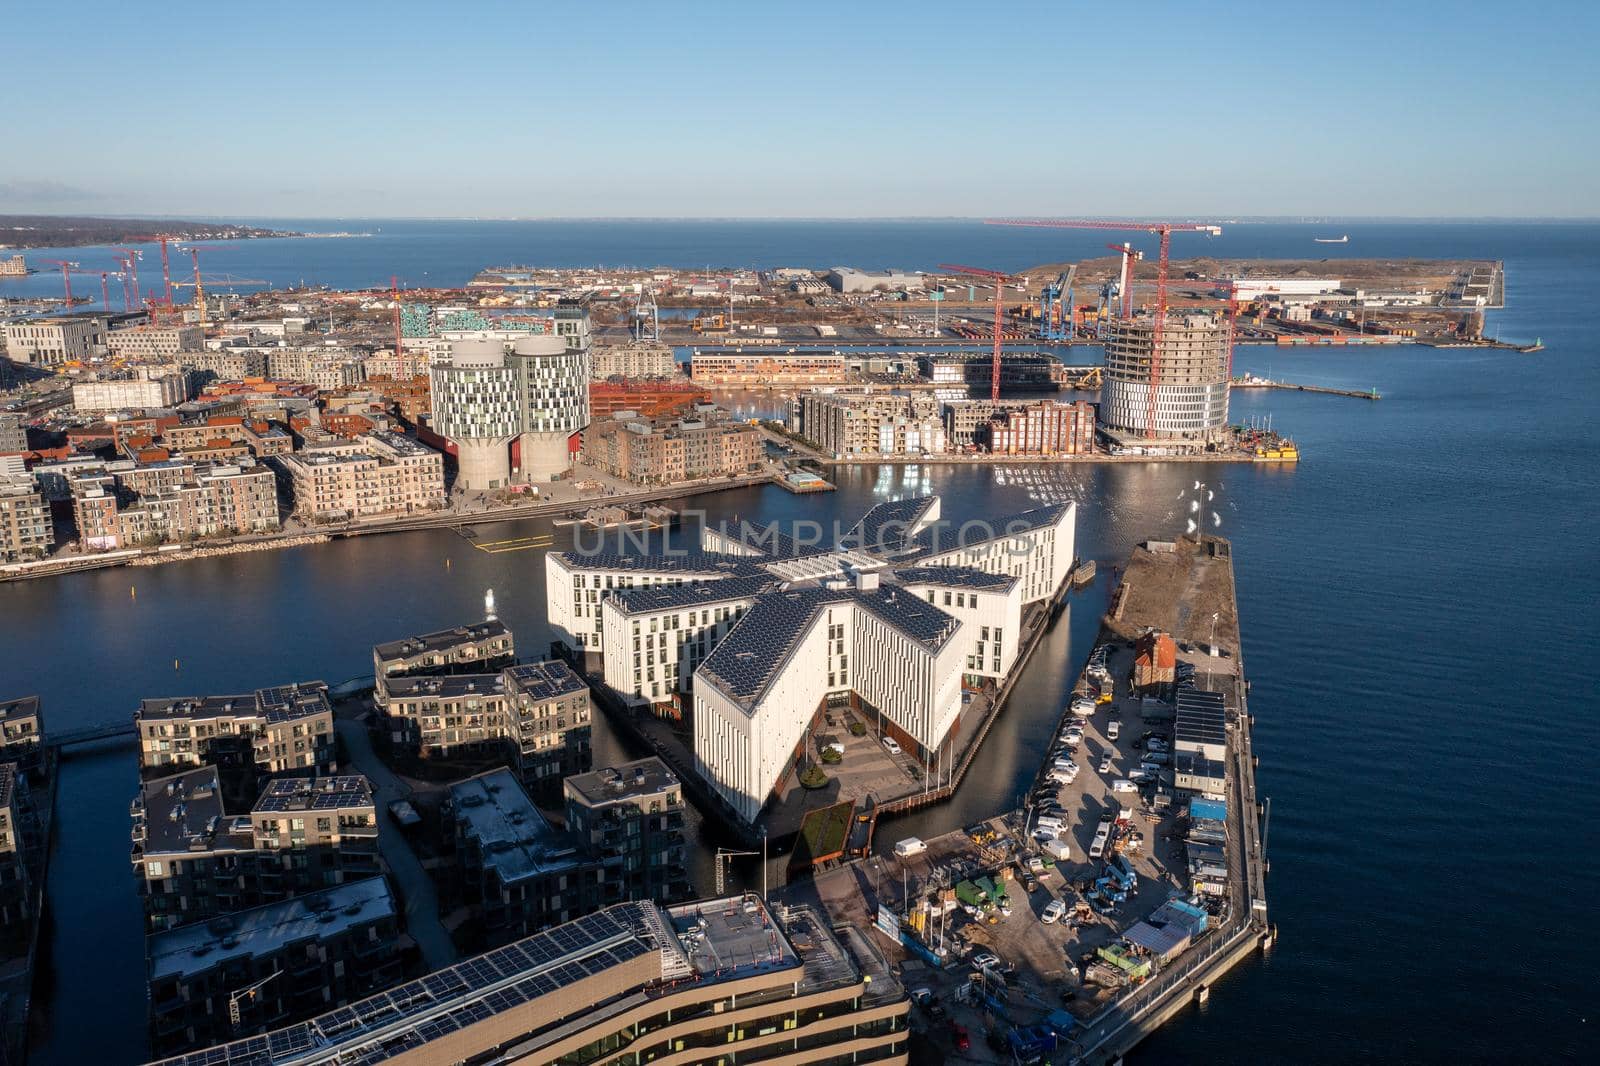 Aerial View of UN City in Copenhagen, Denmark by oliverfoerstner